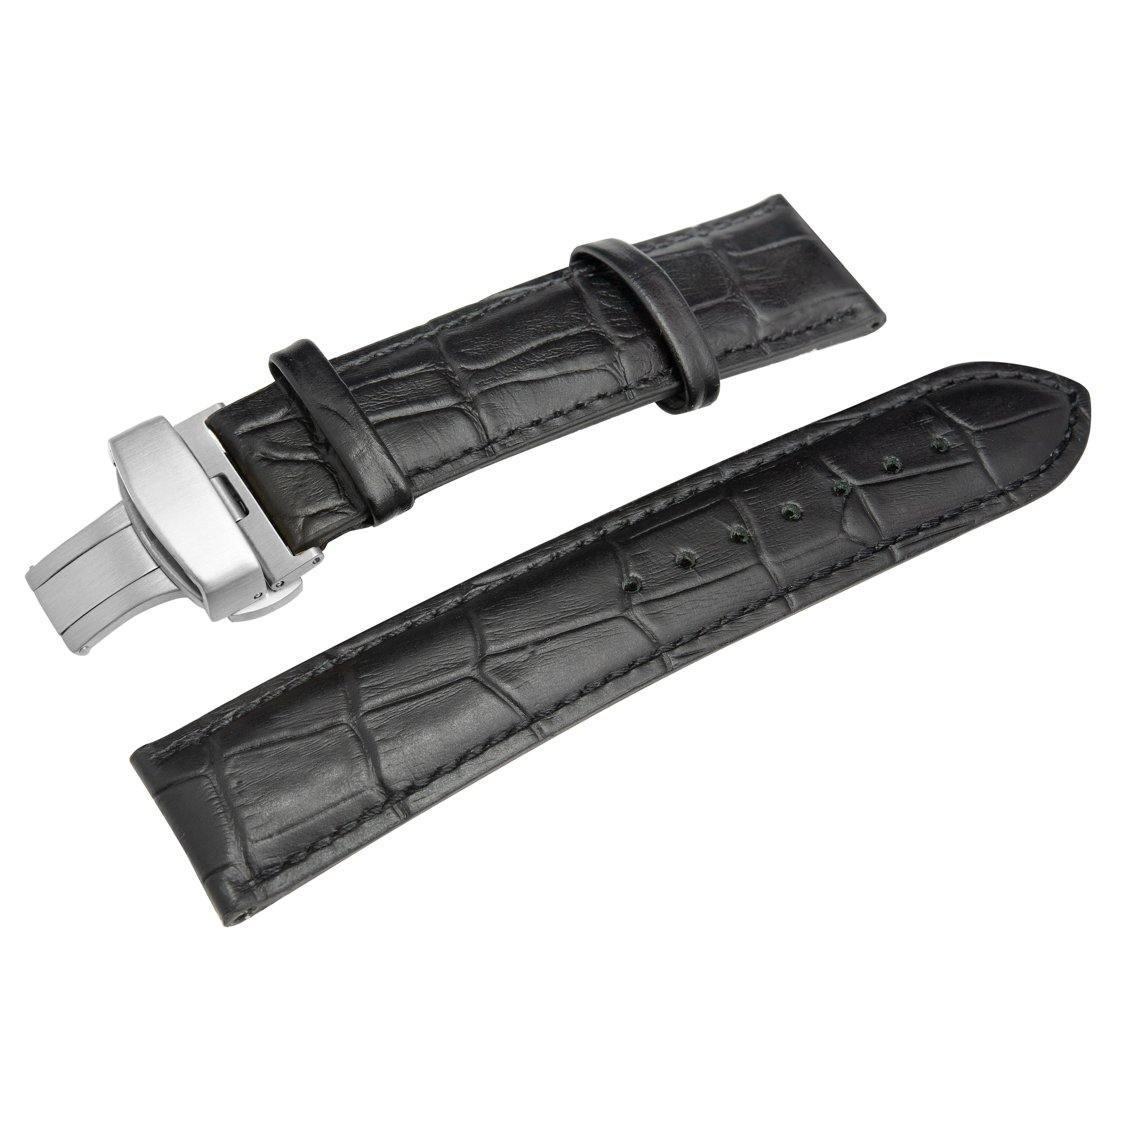 SÖNER HERITAGE C - Alligator strap in black leather SÖNER Watch straps.